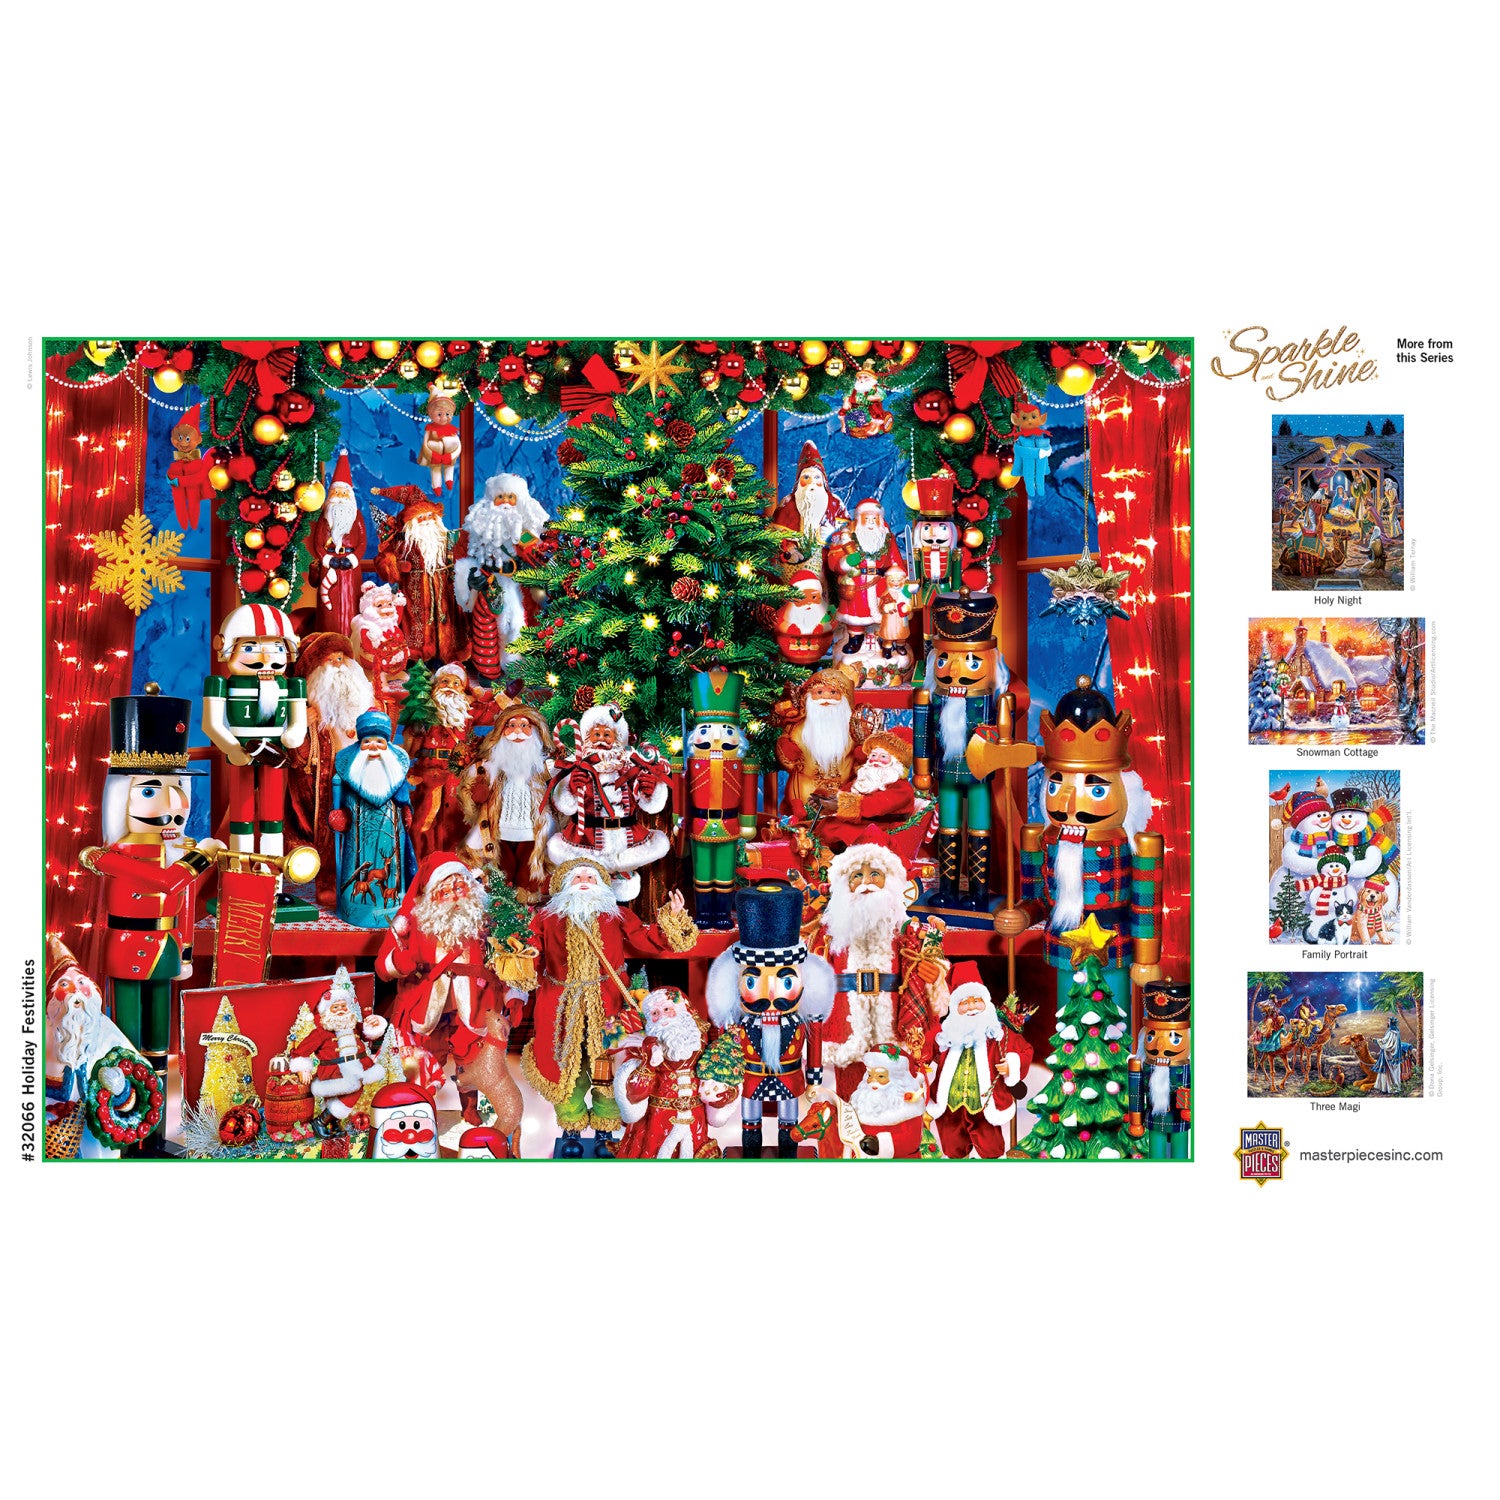 Sparkle & Shine - Holiday Festivities 500 Piece Glitter Puzzle